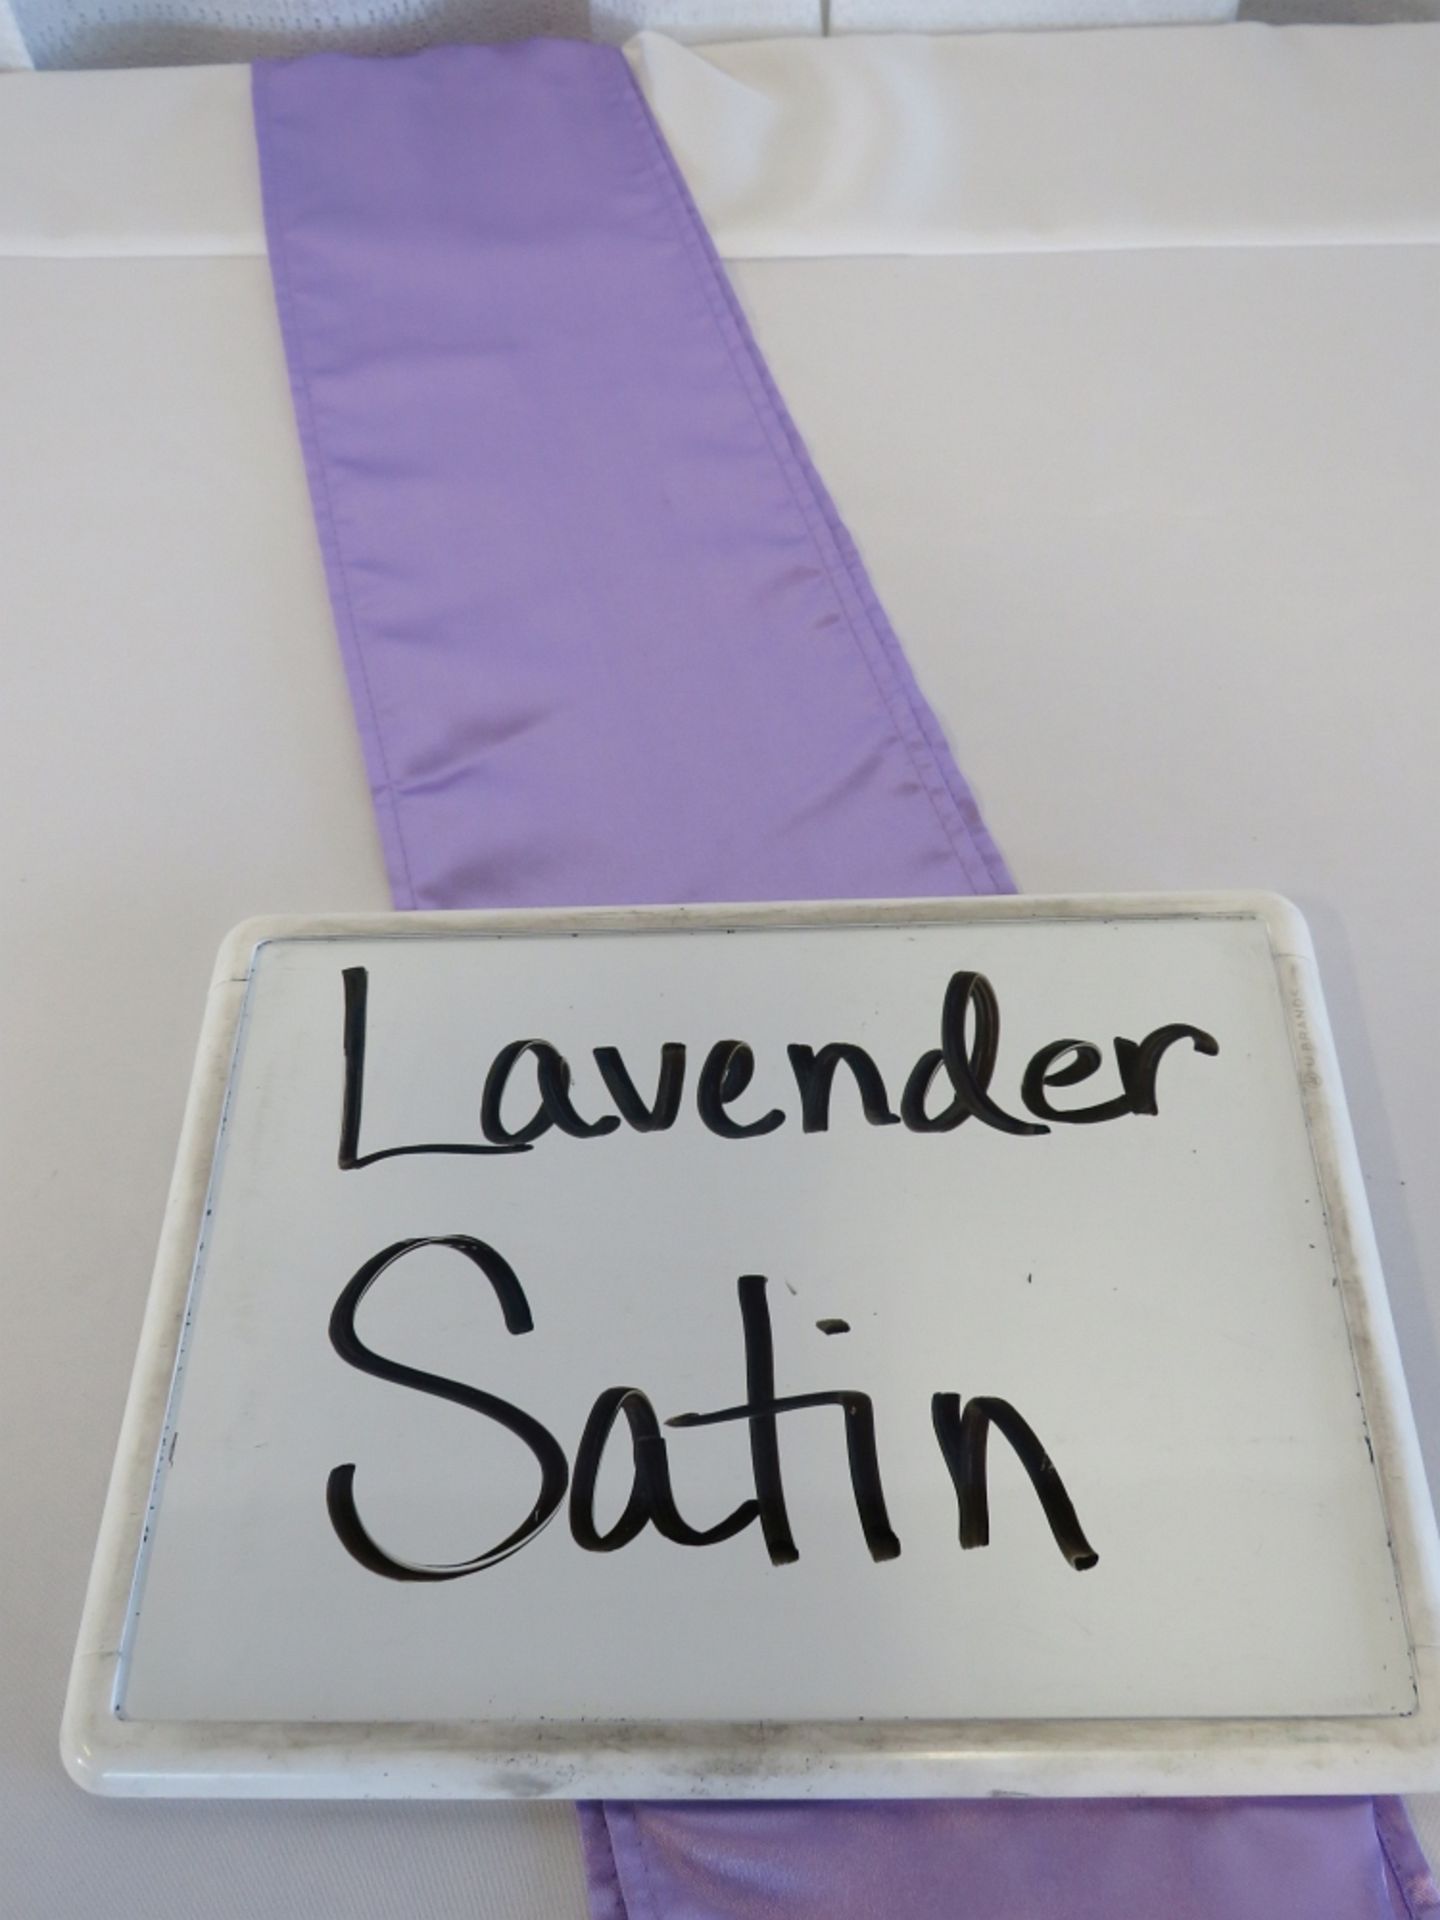 52" x 52" Tablecloth, Lavender Satin